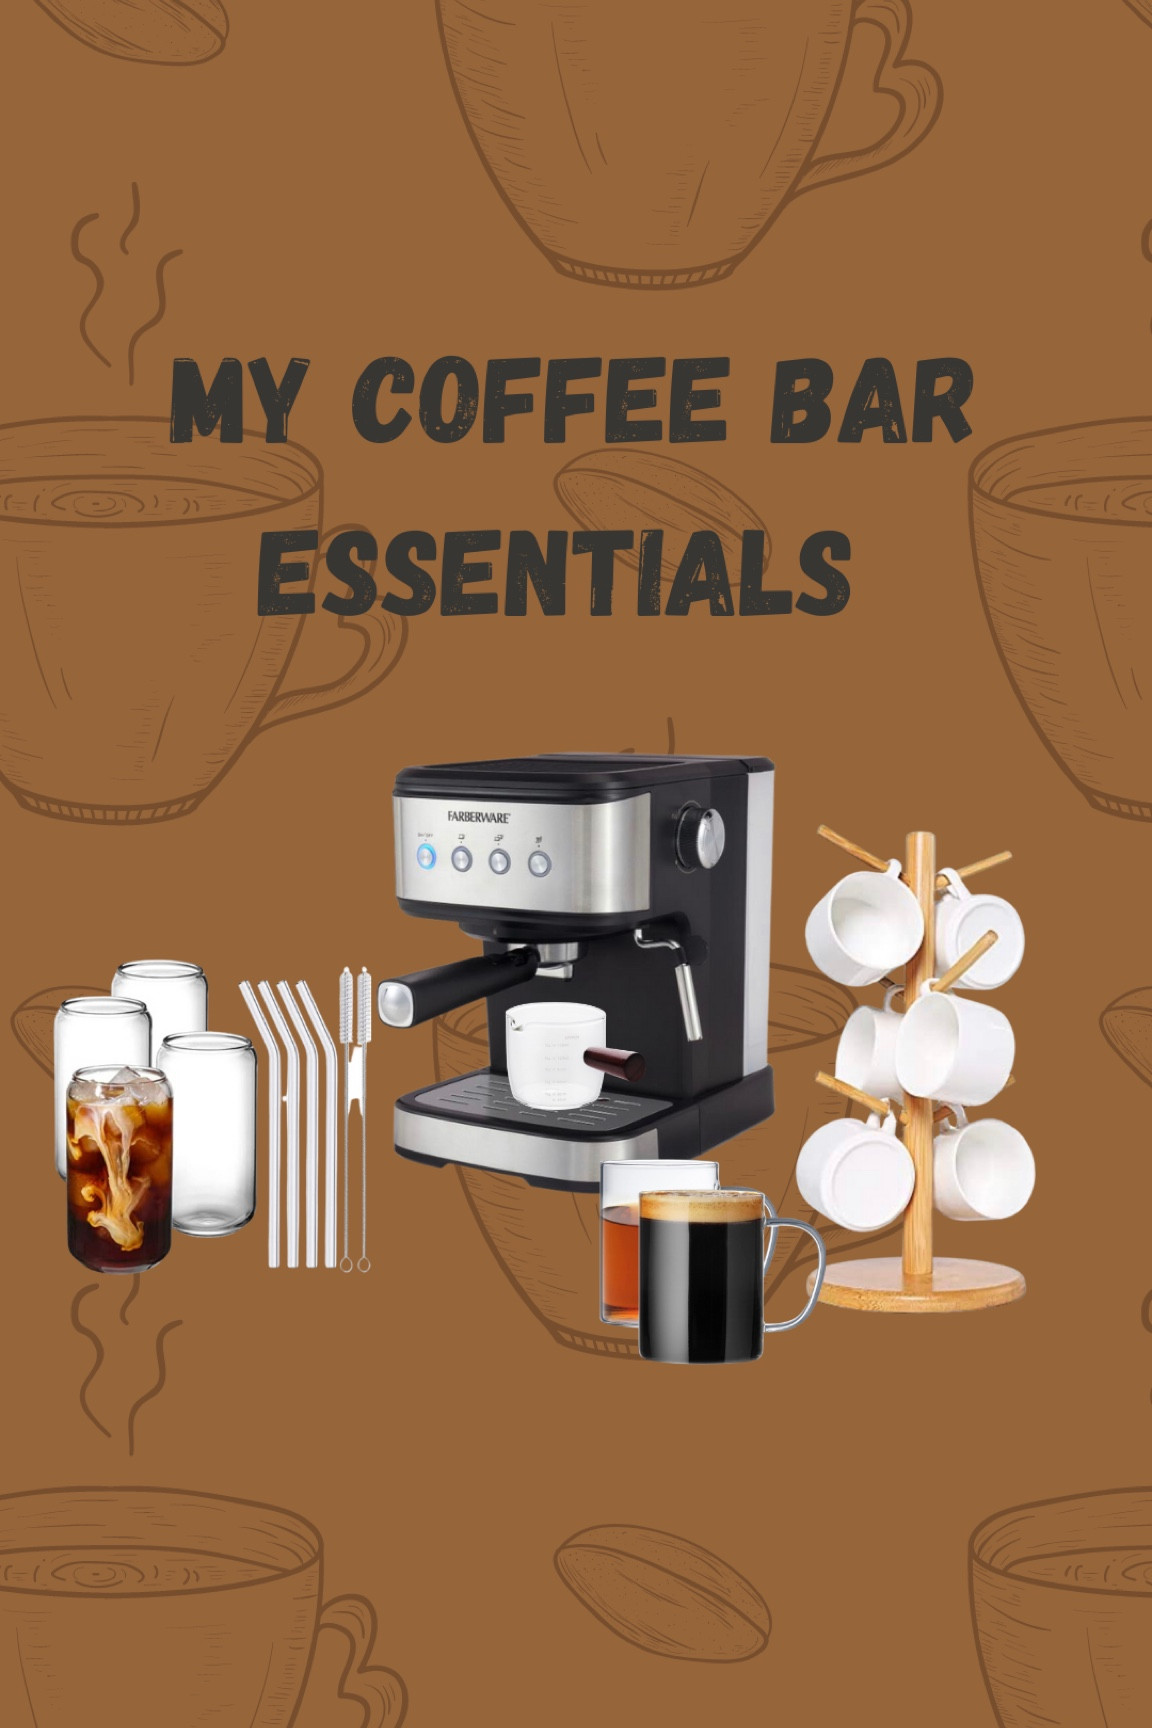 Farberware 20-Bar Espresso Maker, 1.5 Liter Capacity 